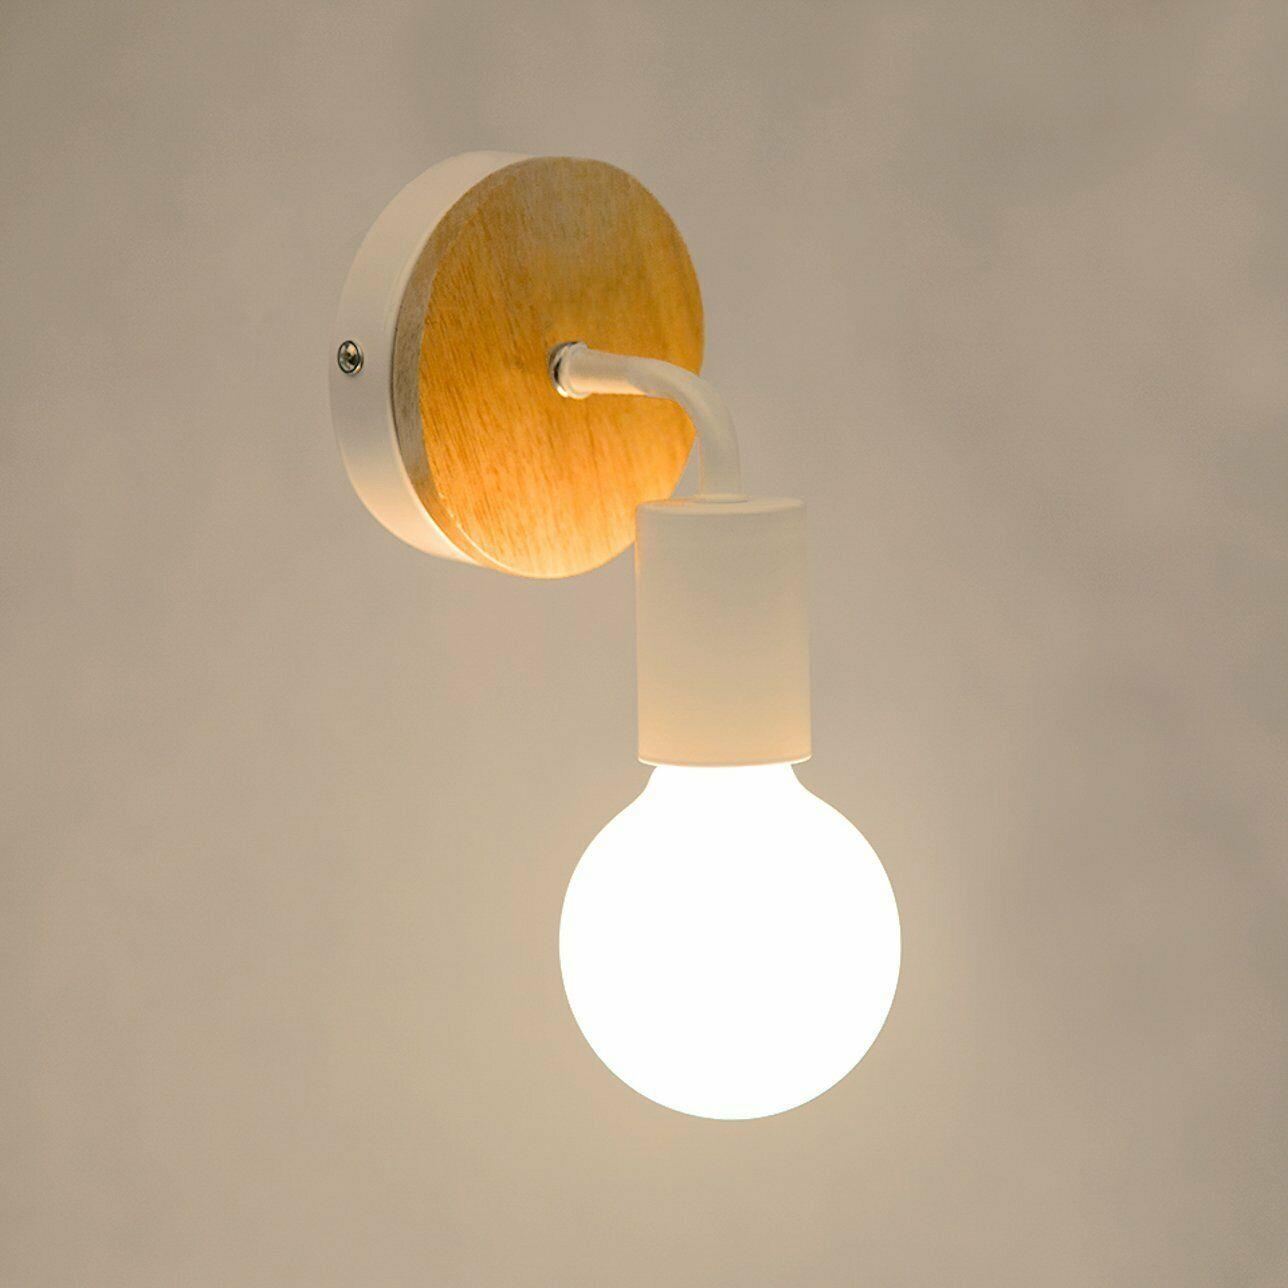 Retro Vintage Industrial Wood Wall Sconce Light Loft Rustic Lamp Light Fixture~1415 - LEDSone UK Ltd